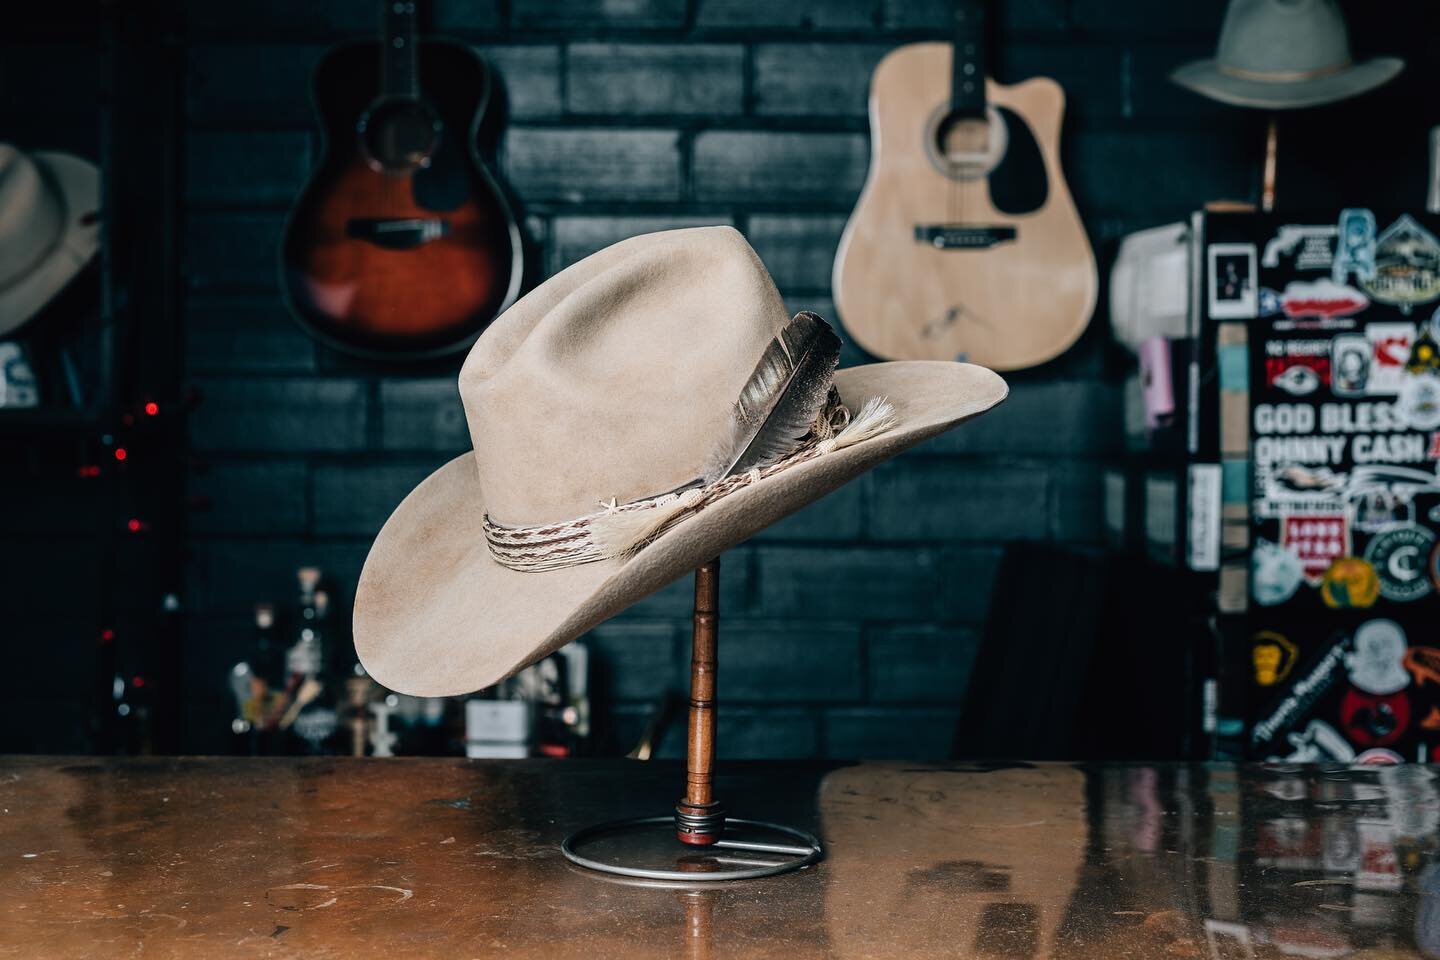 The redefined cowboy ✯
&bull;
&bull;
&bull; 📸 @caffeineandgasoline.x 
#aspenhatter #customhats #bespoke #artisans #locallymade #customhat #hatter #westernvibes #aspen #aspenco #austintx #austin365 #handmade #customized #hatshots #hats #style #bohost